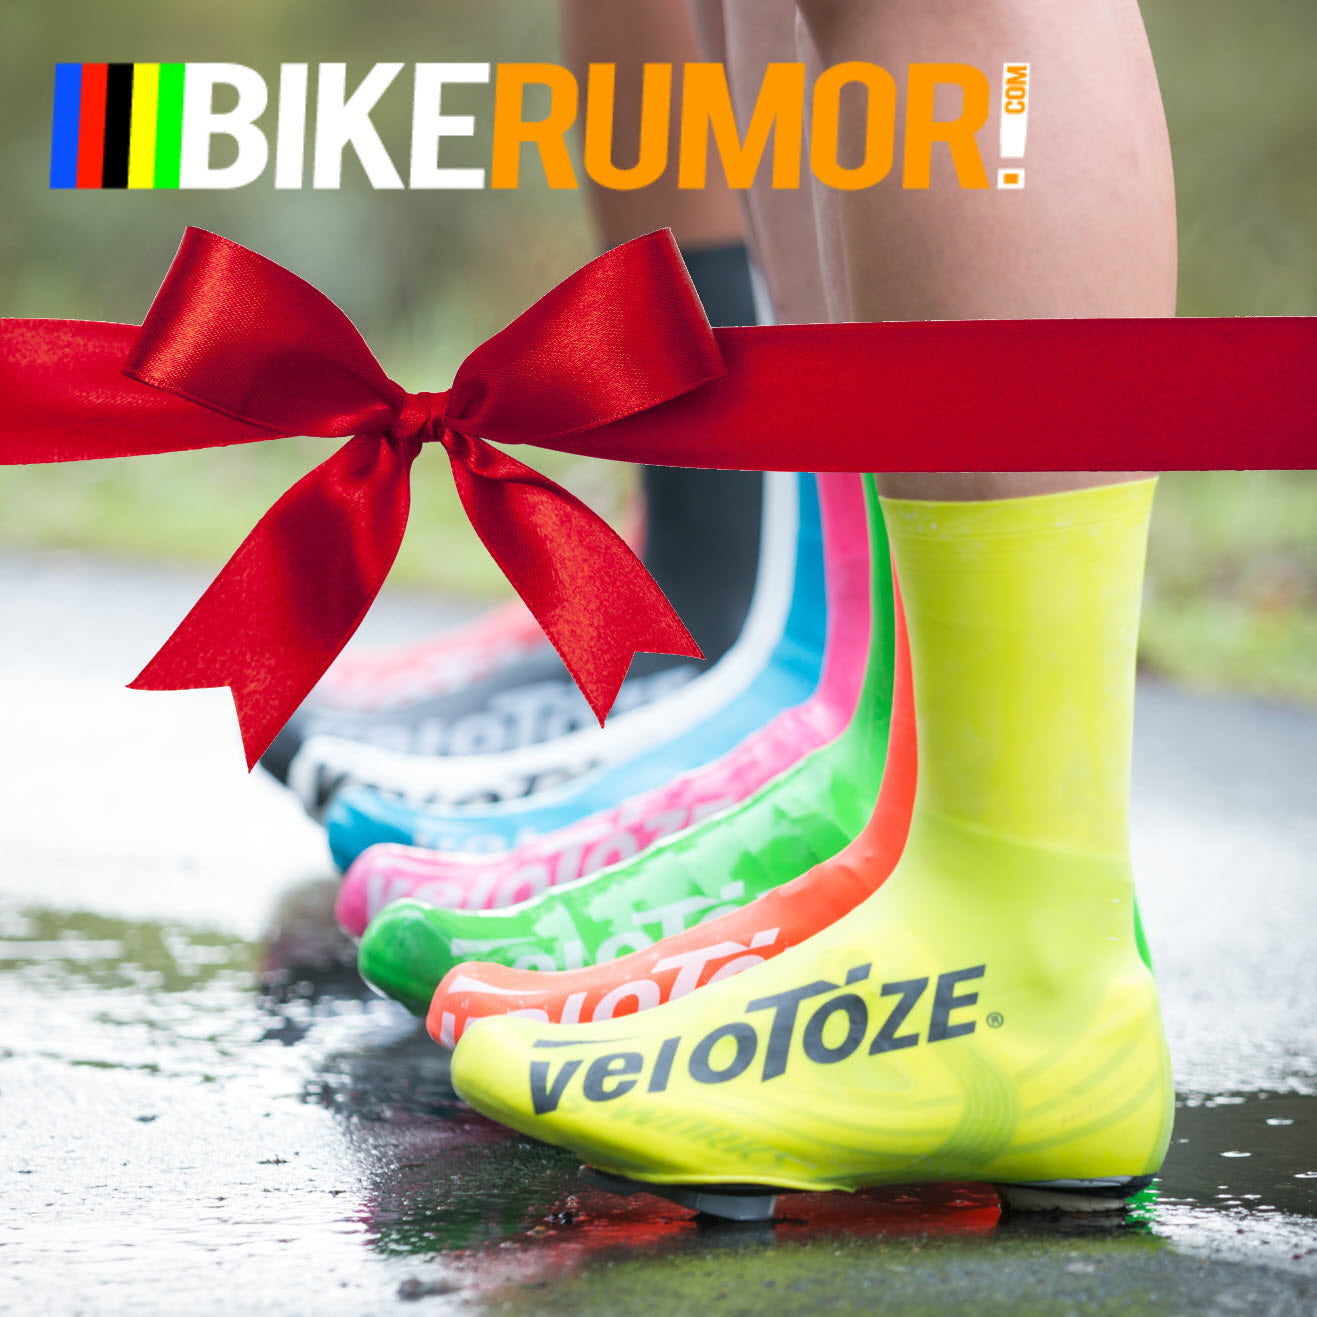 veloToze Tall Shoe Covers named BikeRumor's Editor's Choice